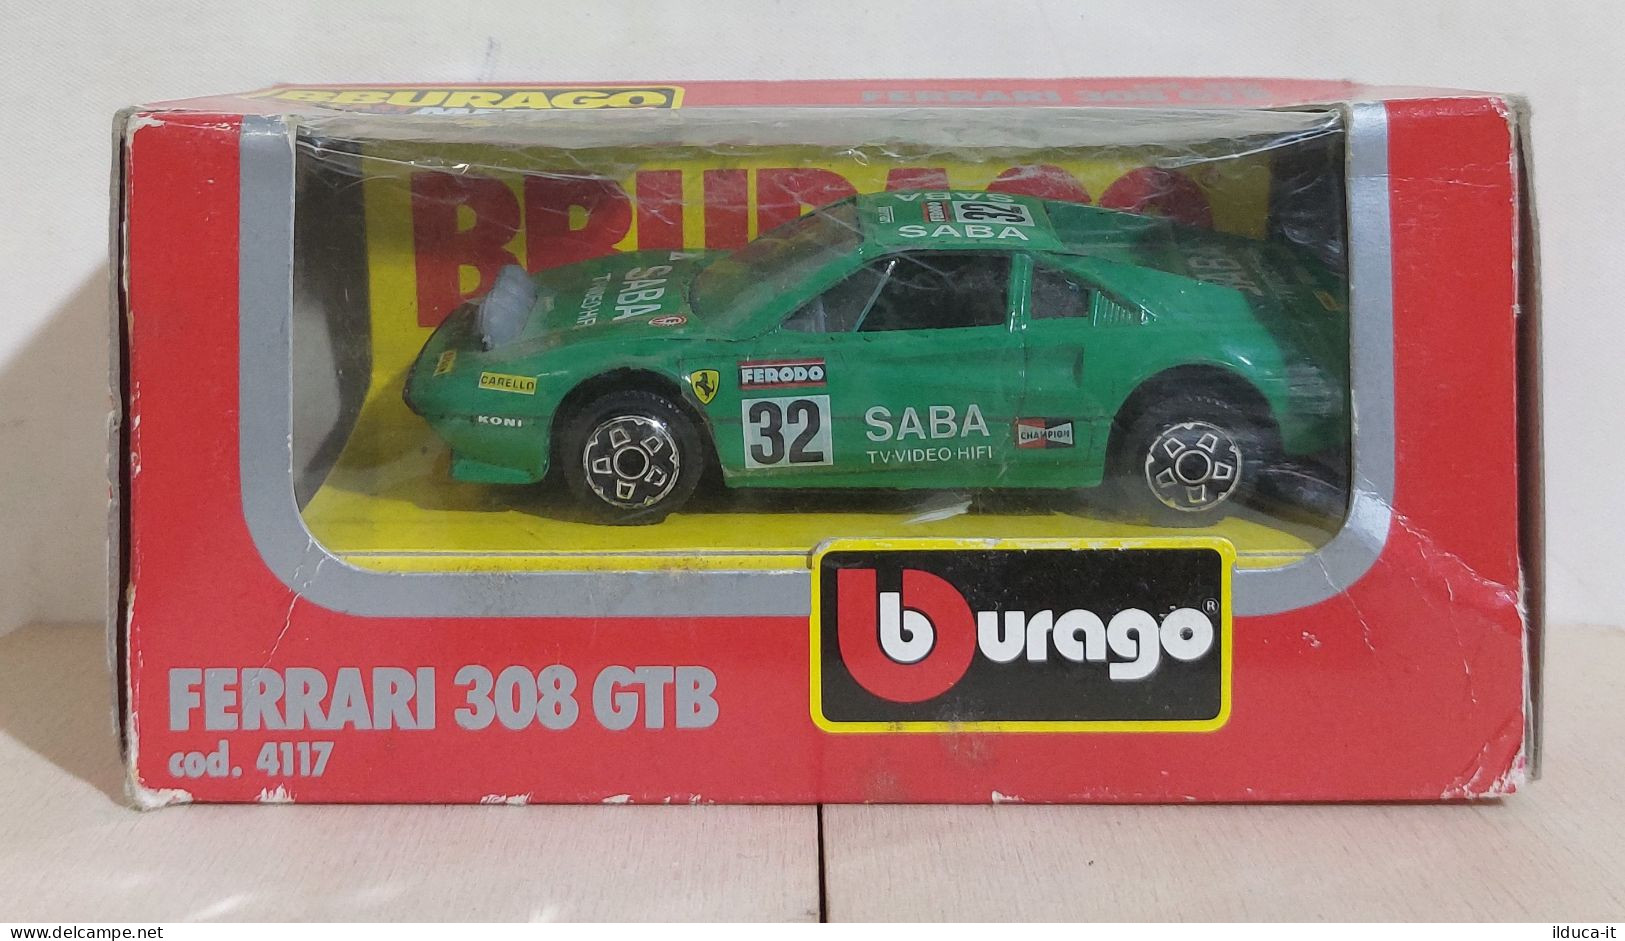 I116022 BURAGO 1/43 Serie Die Cast Metal N. 4117 - Ferrari 308 GTB - Box - Burago